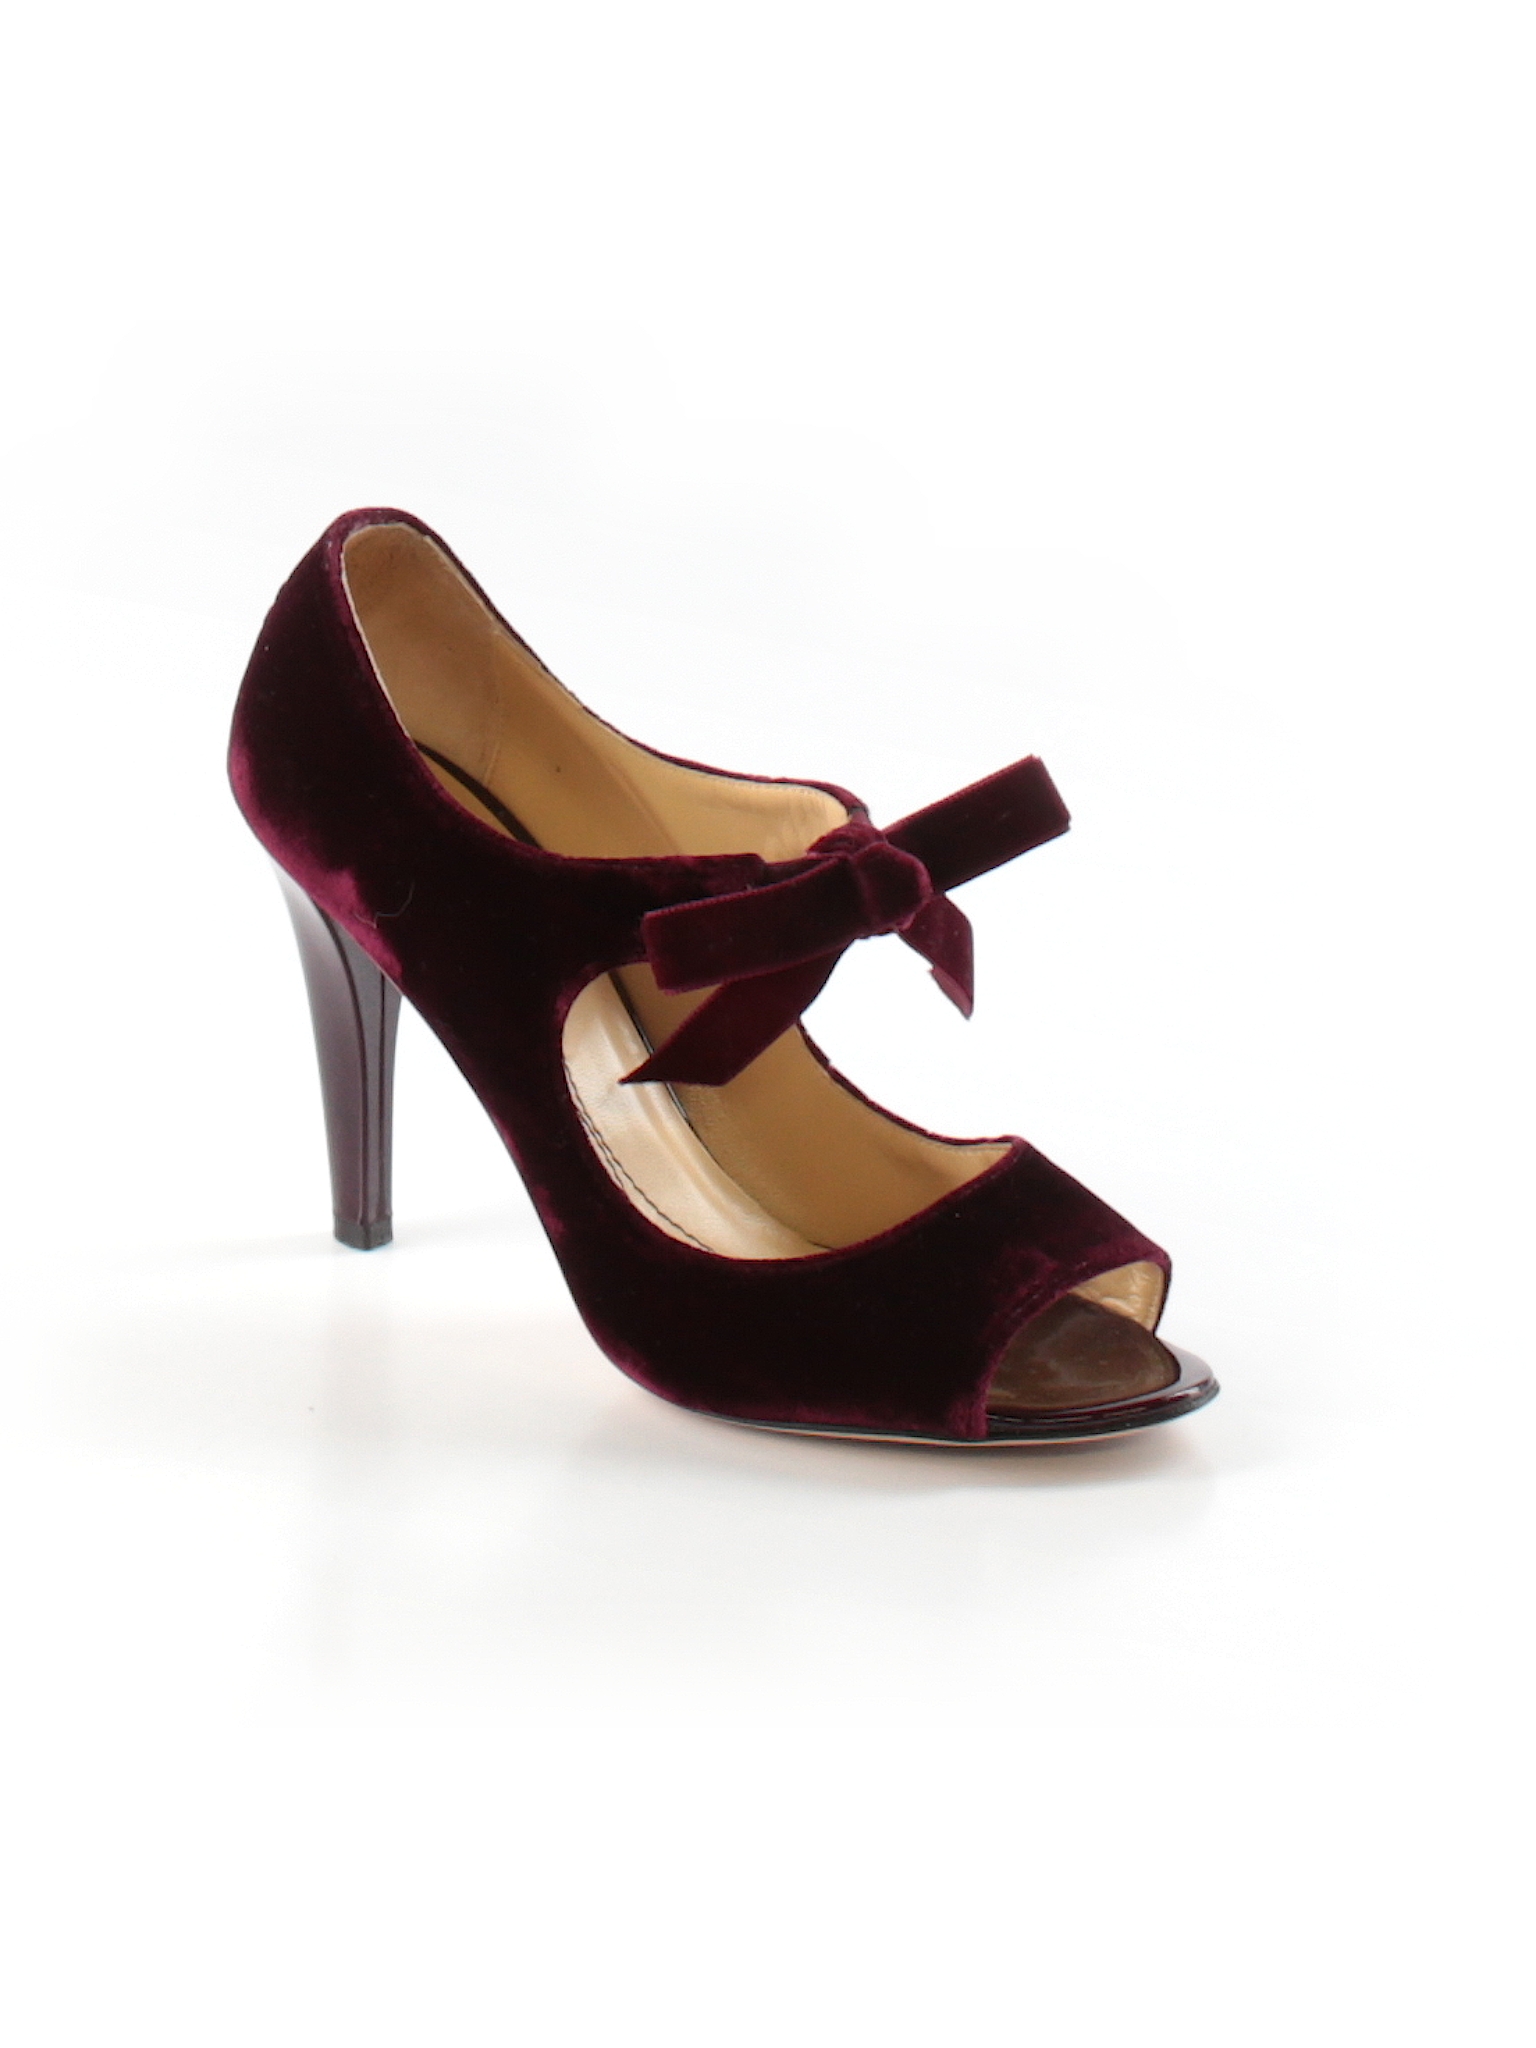 Kate Spade New York Solid Burgundy Heels Size 8 1/2 - 81% off | thredUP